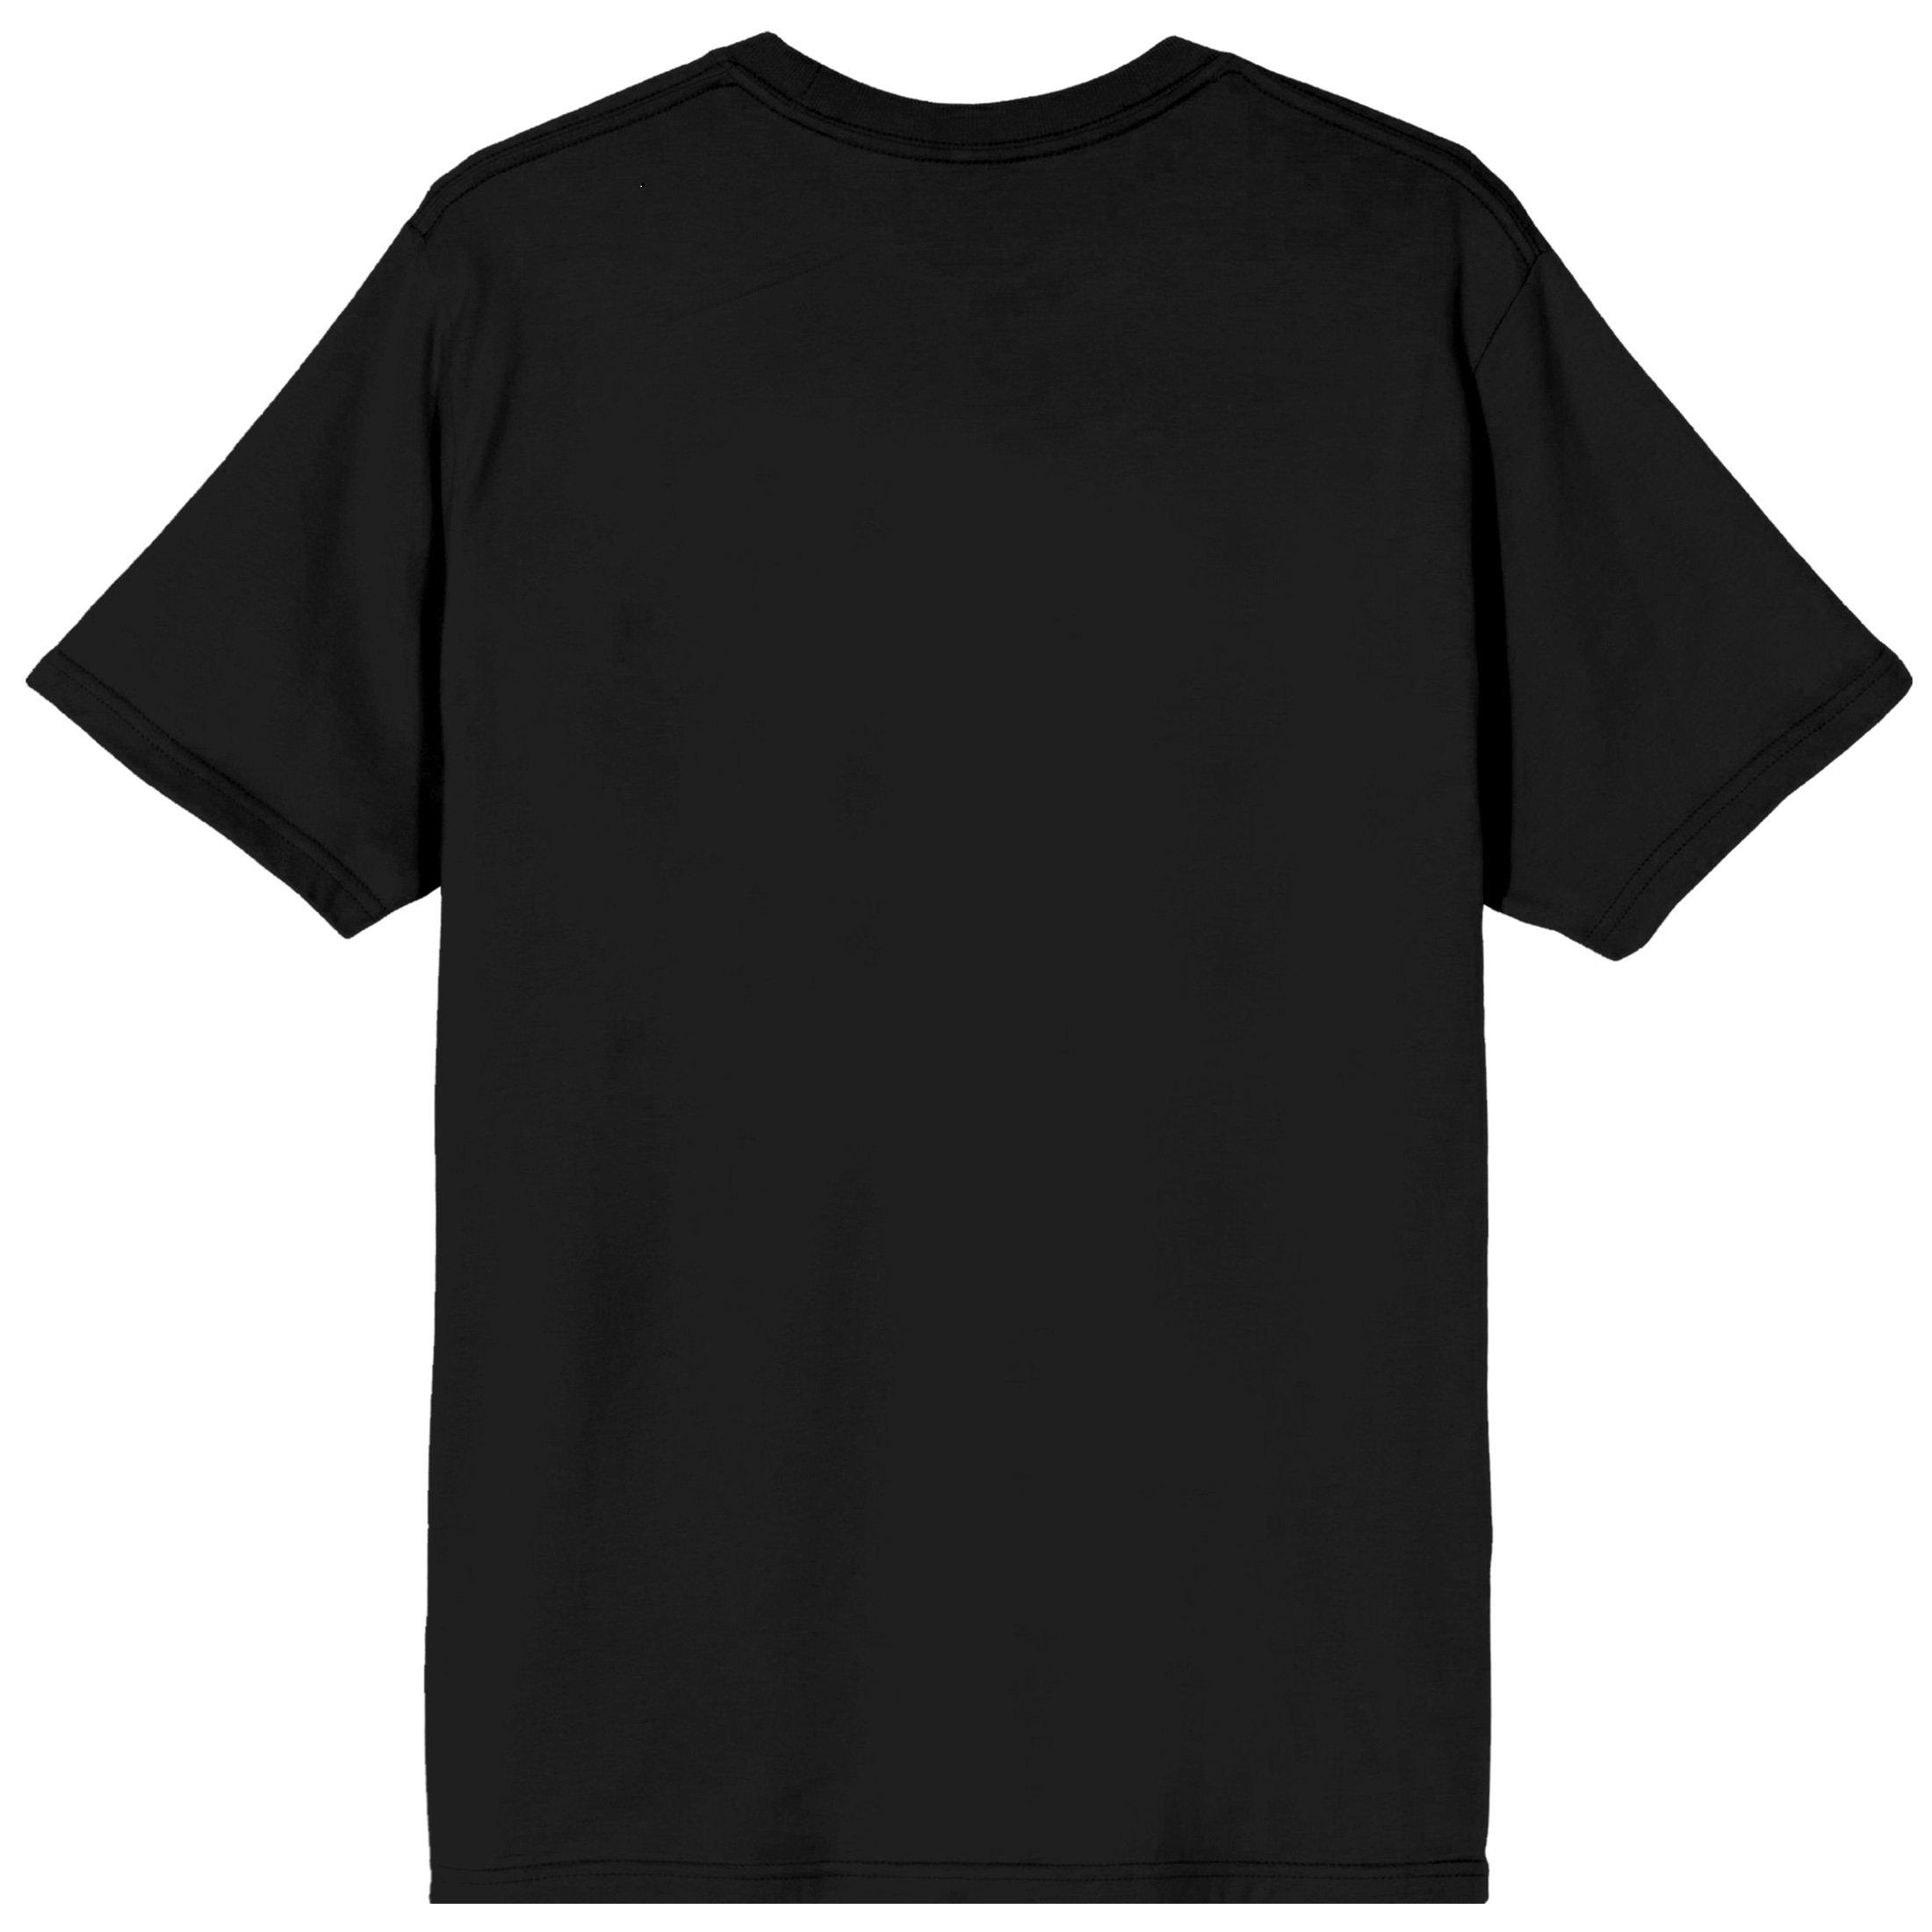 Dragon Ball Z Anime Cartoon Characters Men's Black Short Sleeve Graphic T-Shirt